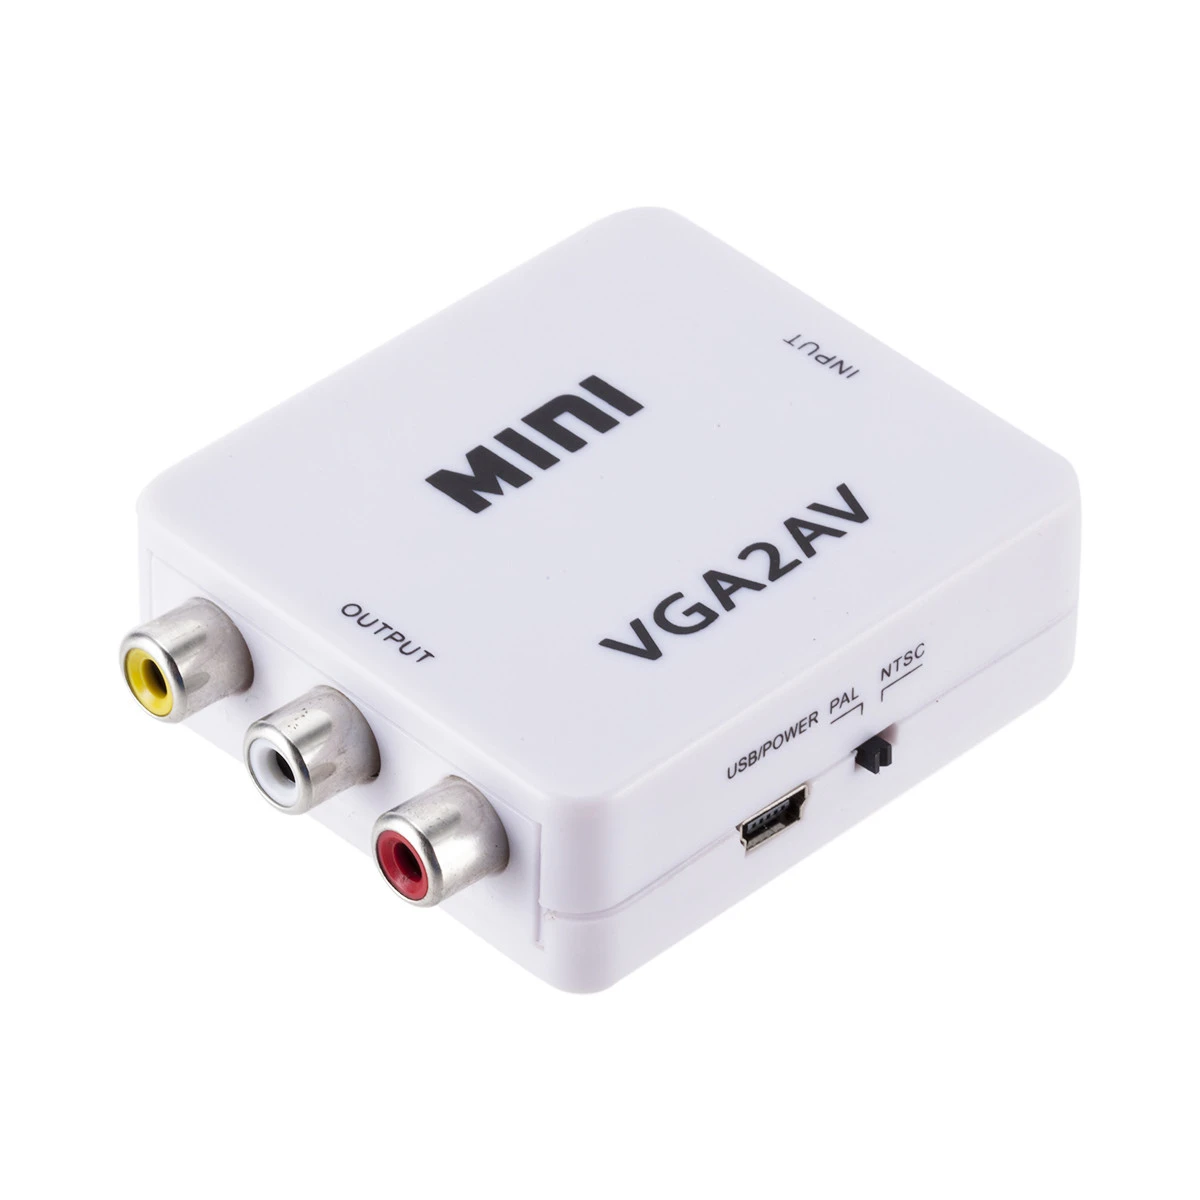 Mini VGA to RCA AV Video Converter box,VGA+3.5mm audio input RCA Composite output converter with USB cable